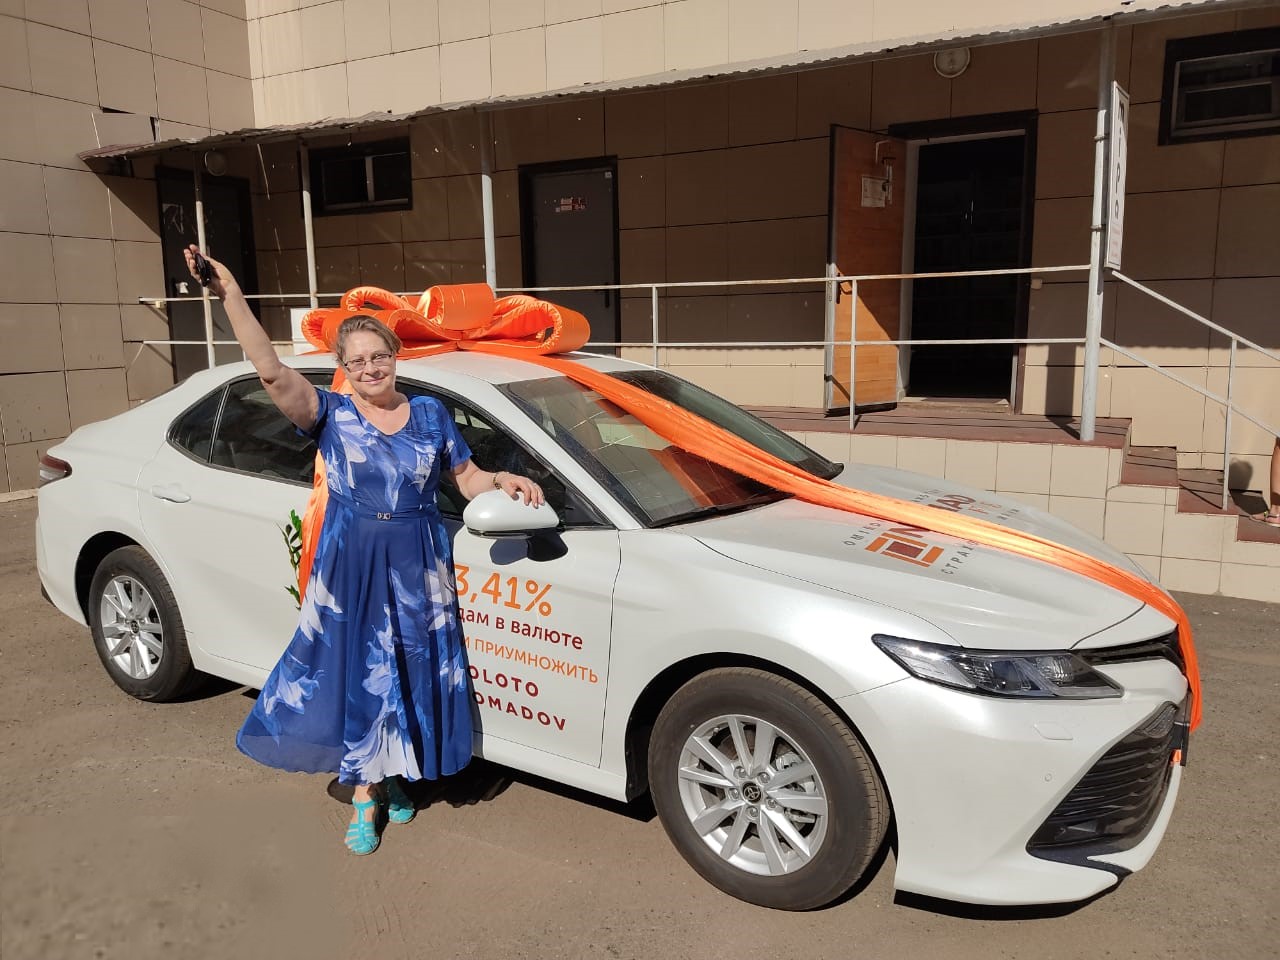 A customer of Nomad Life won a car